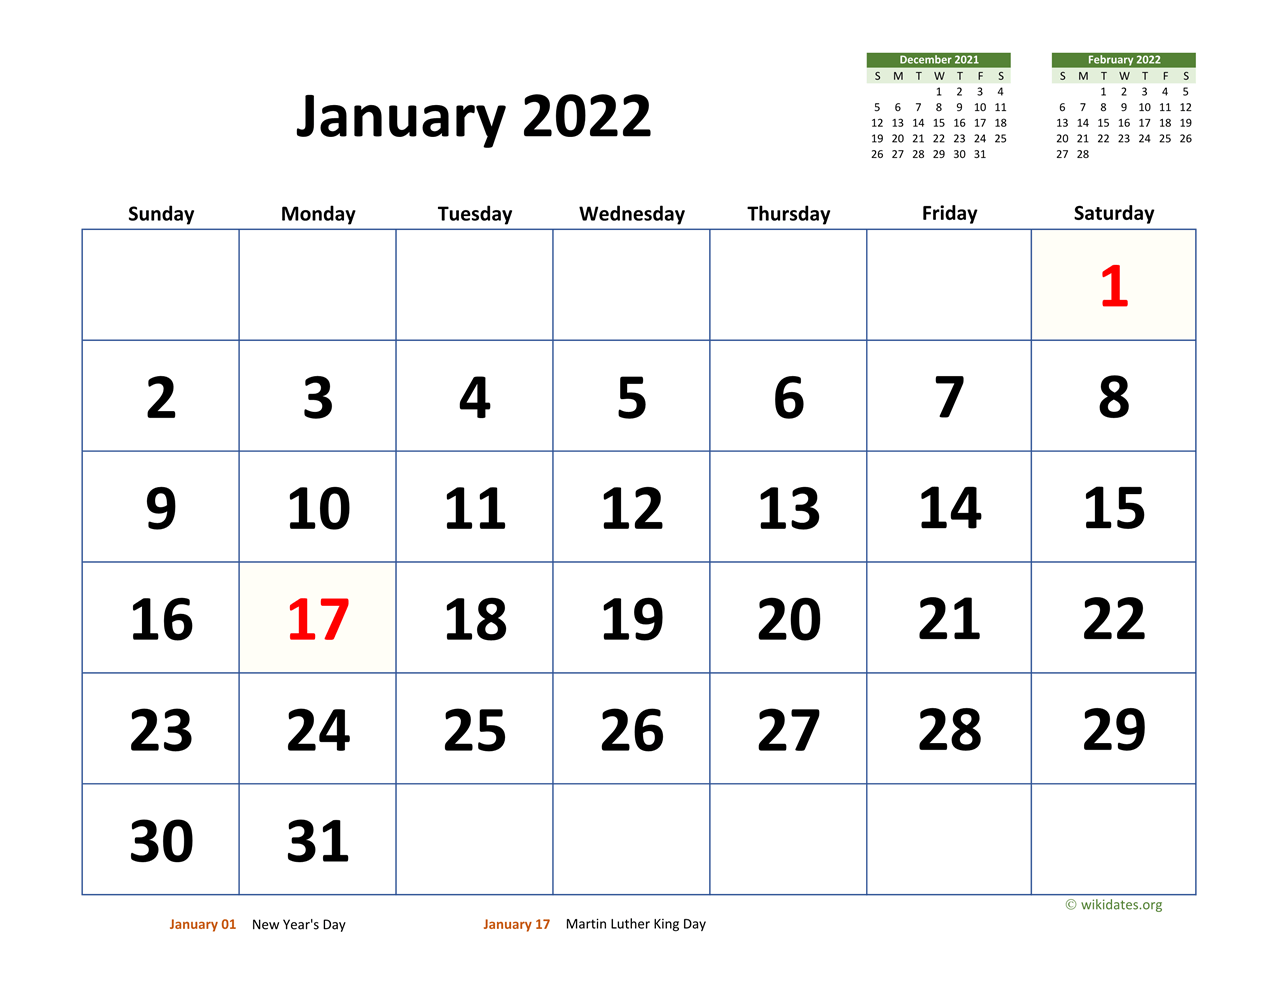 December 2021 January 2022 Calendar January 2022 Calendar With Extra-Large Dates | Wikidates.org